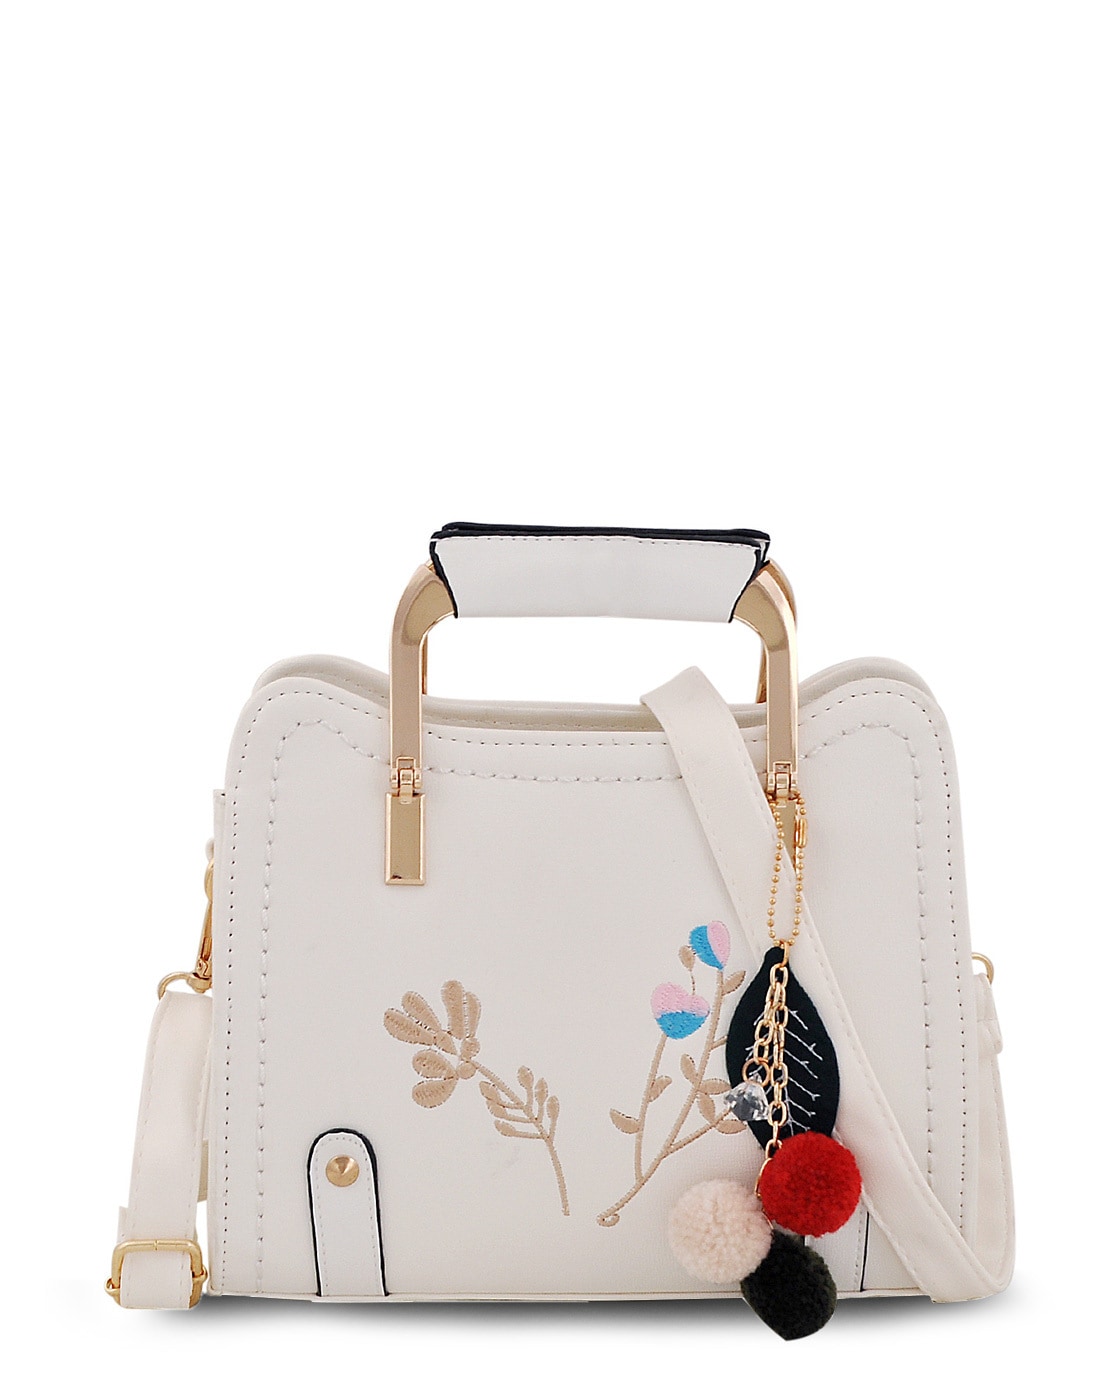 Outstanding Handbag Designs For Women /Ladies |New Handbag Collection 2020  | Trendy Purse Designs - YouTube